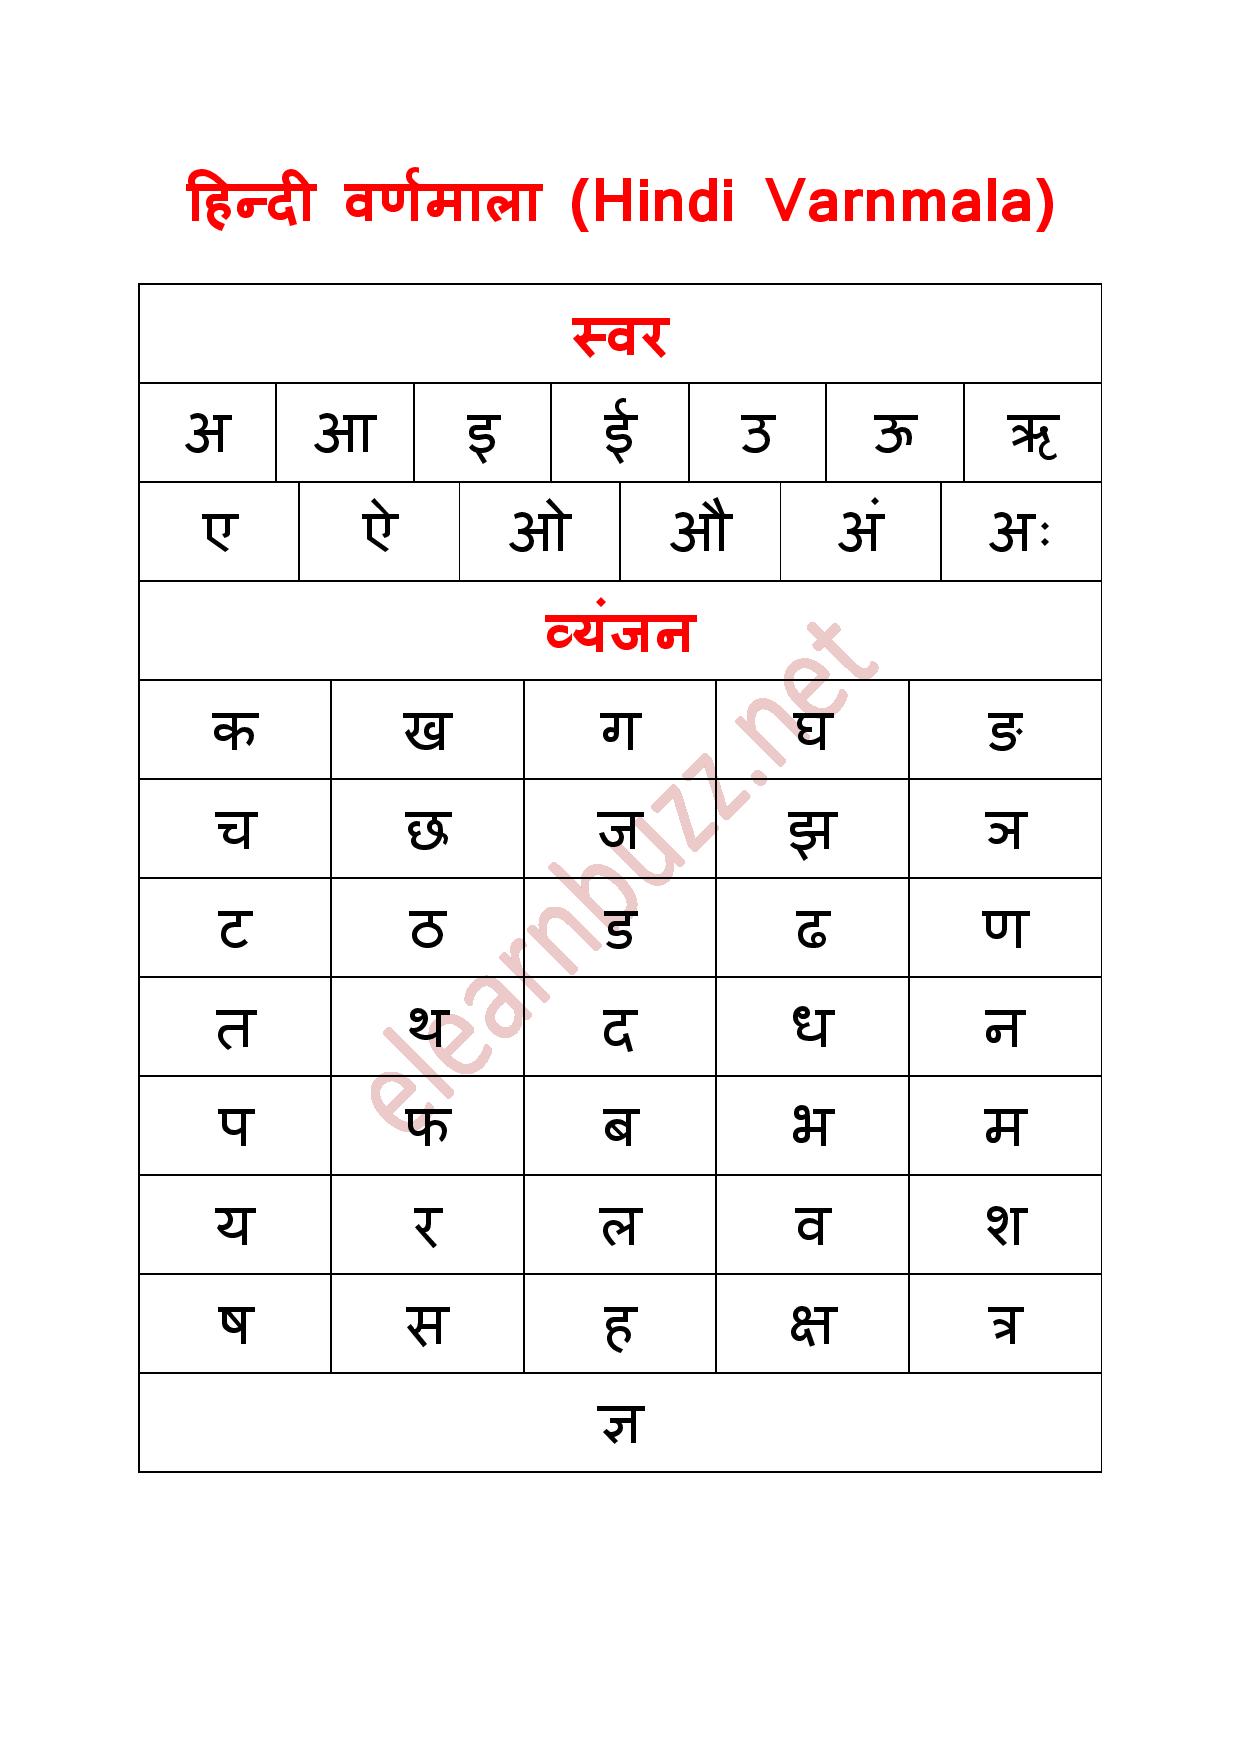 Oshi Hindi Varnamala Chart Paper Print Educational Posters In India Images